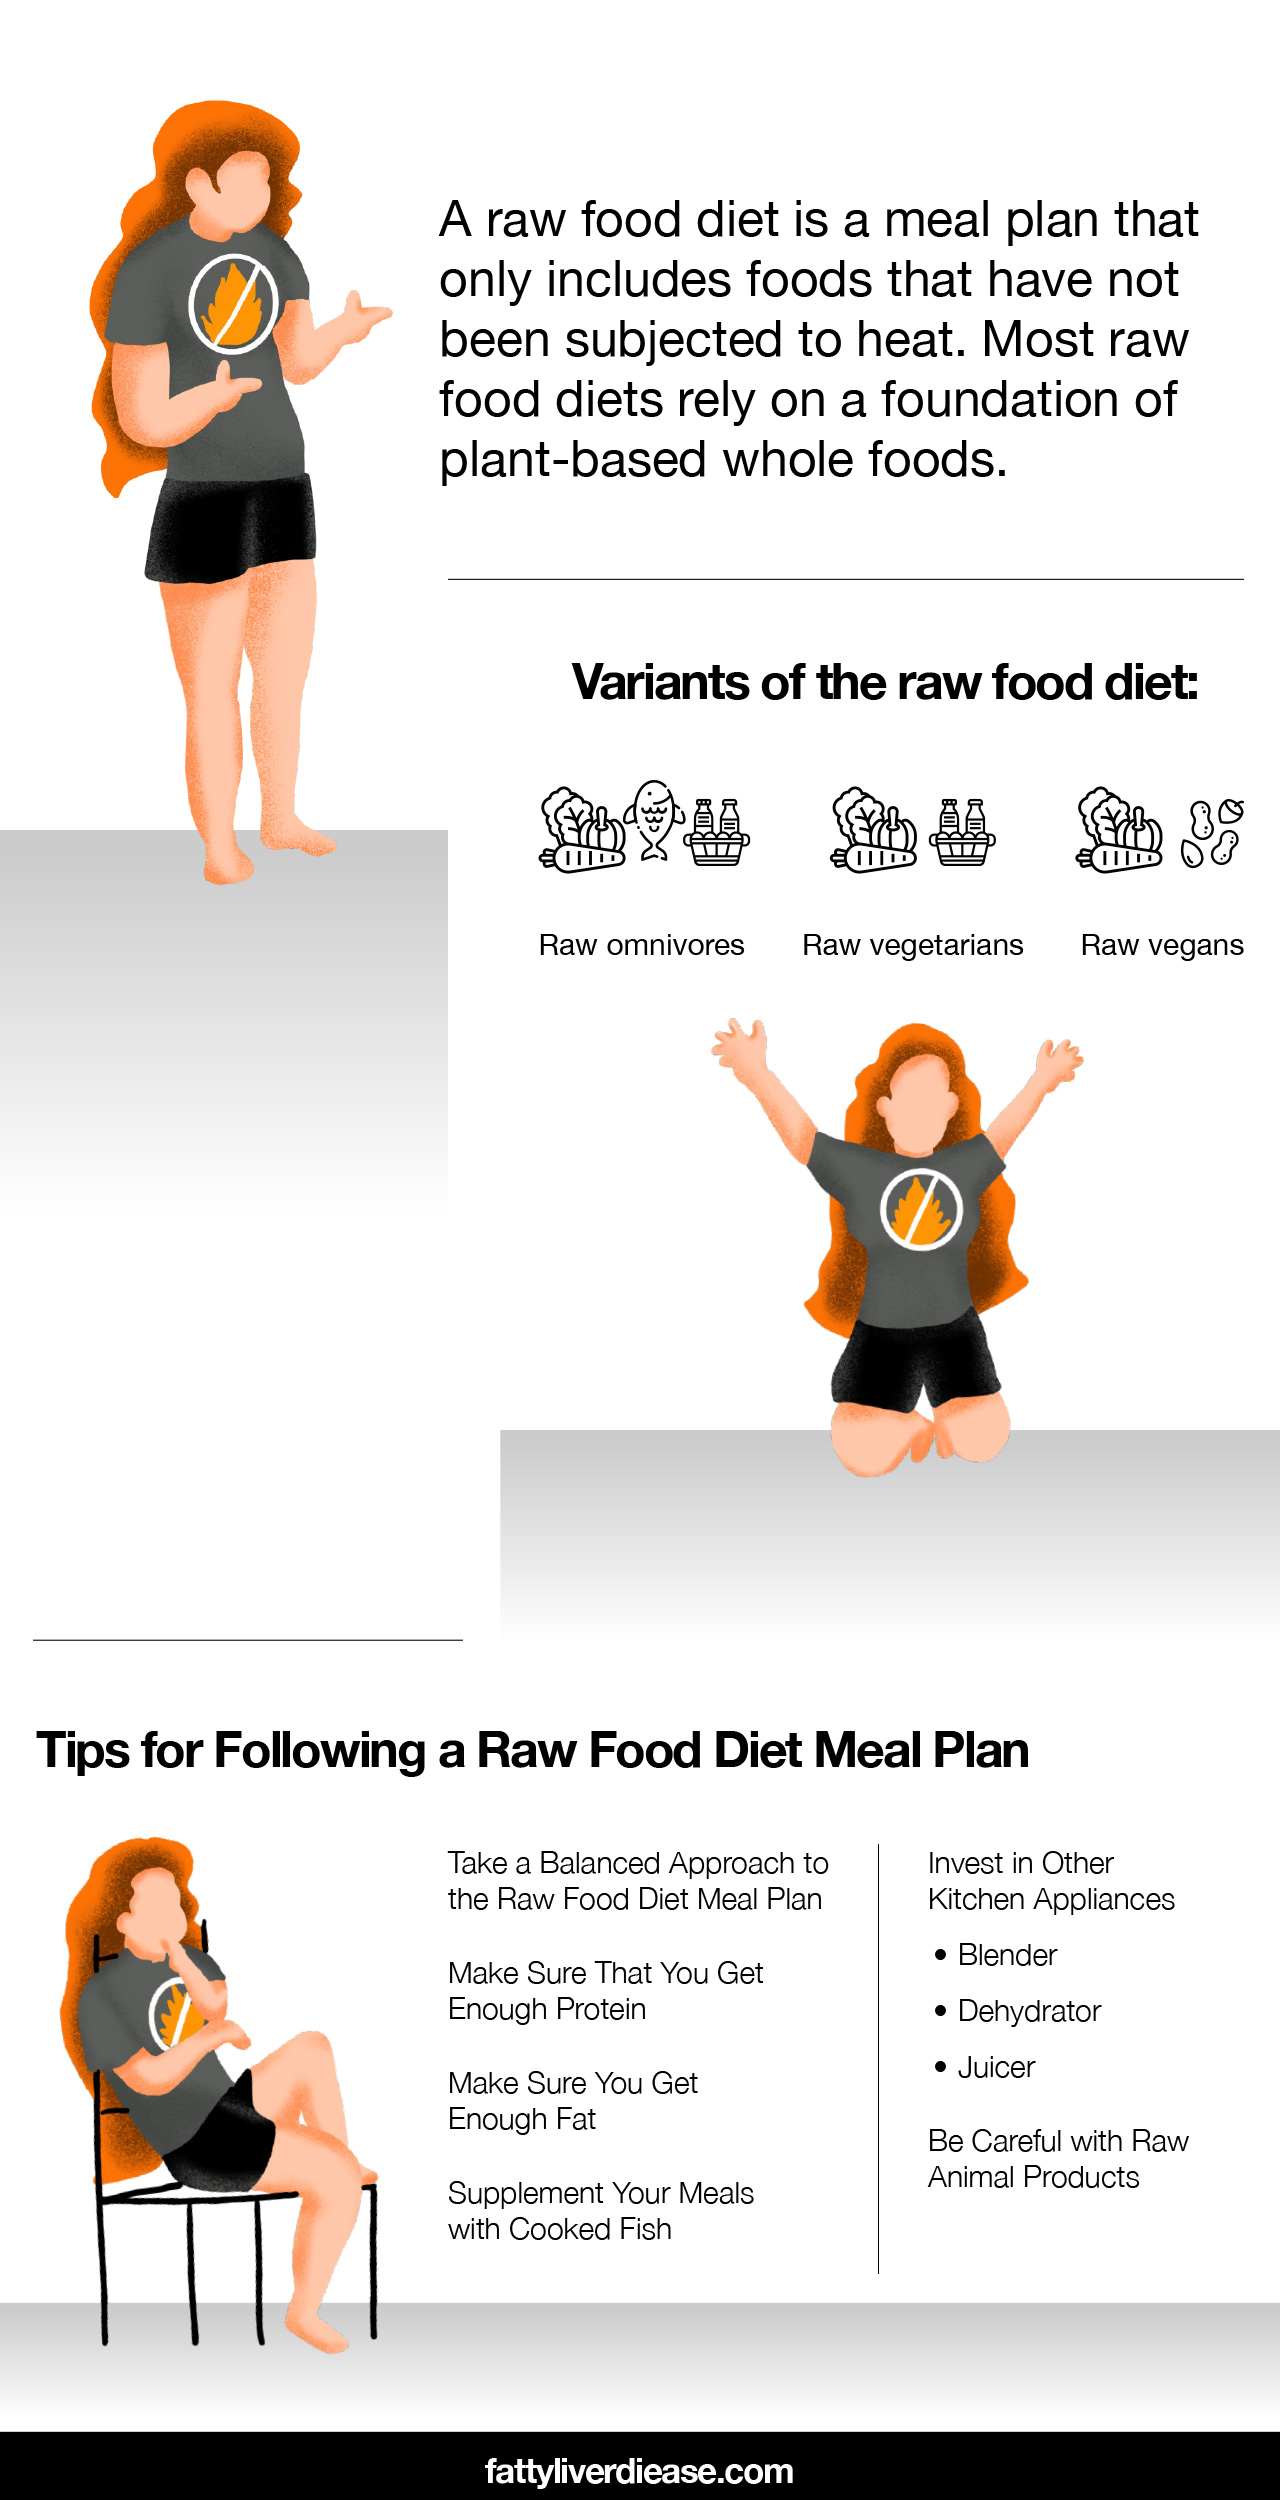 Raw food diet meal plan